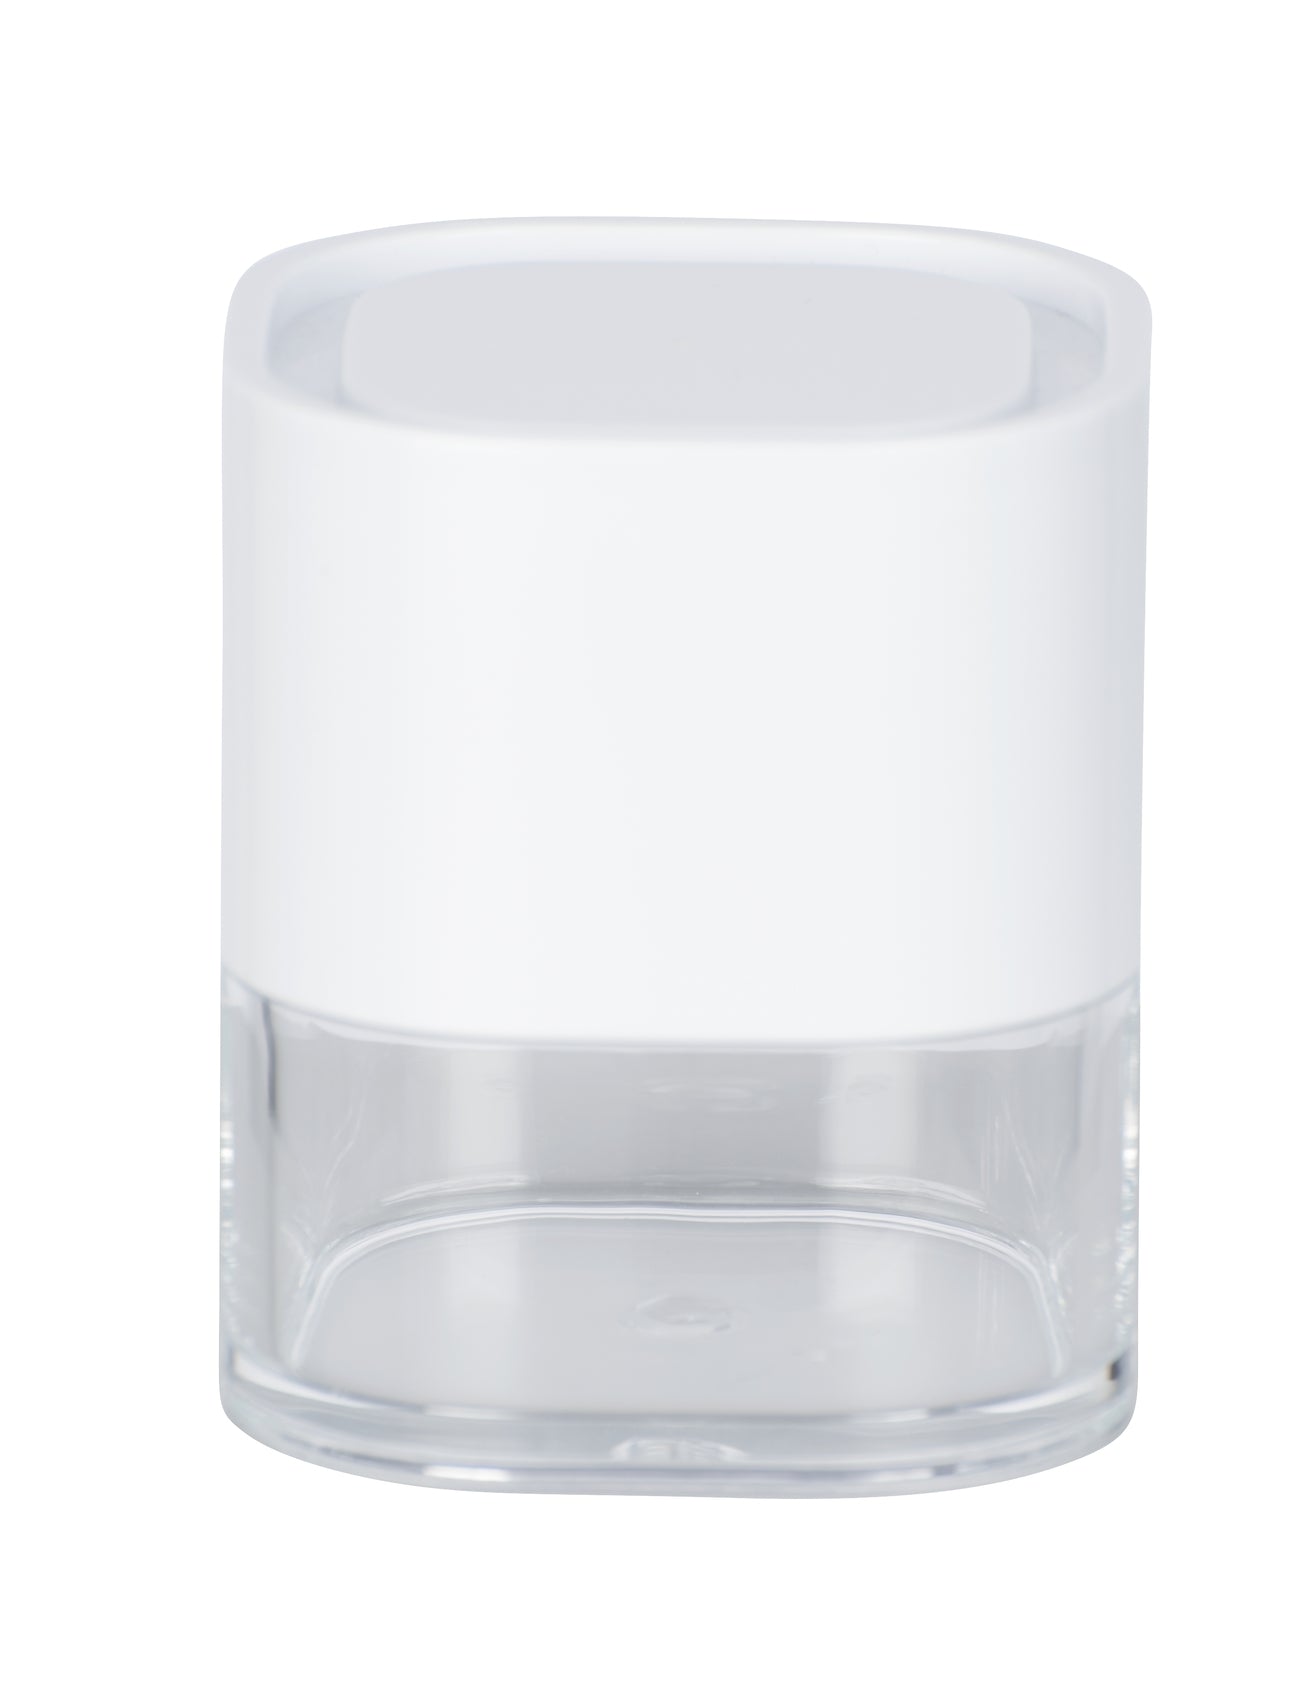 BATHROOM STORAGE JAR - ORIA - WHITE & CLEAR ACRYLIC - 7.5X8.5X7.5CM